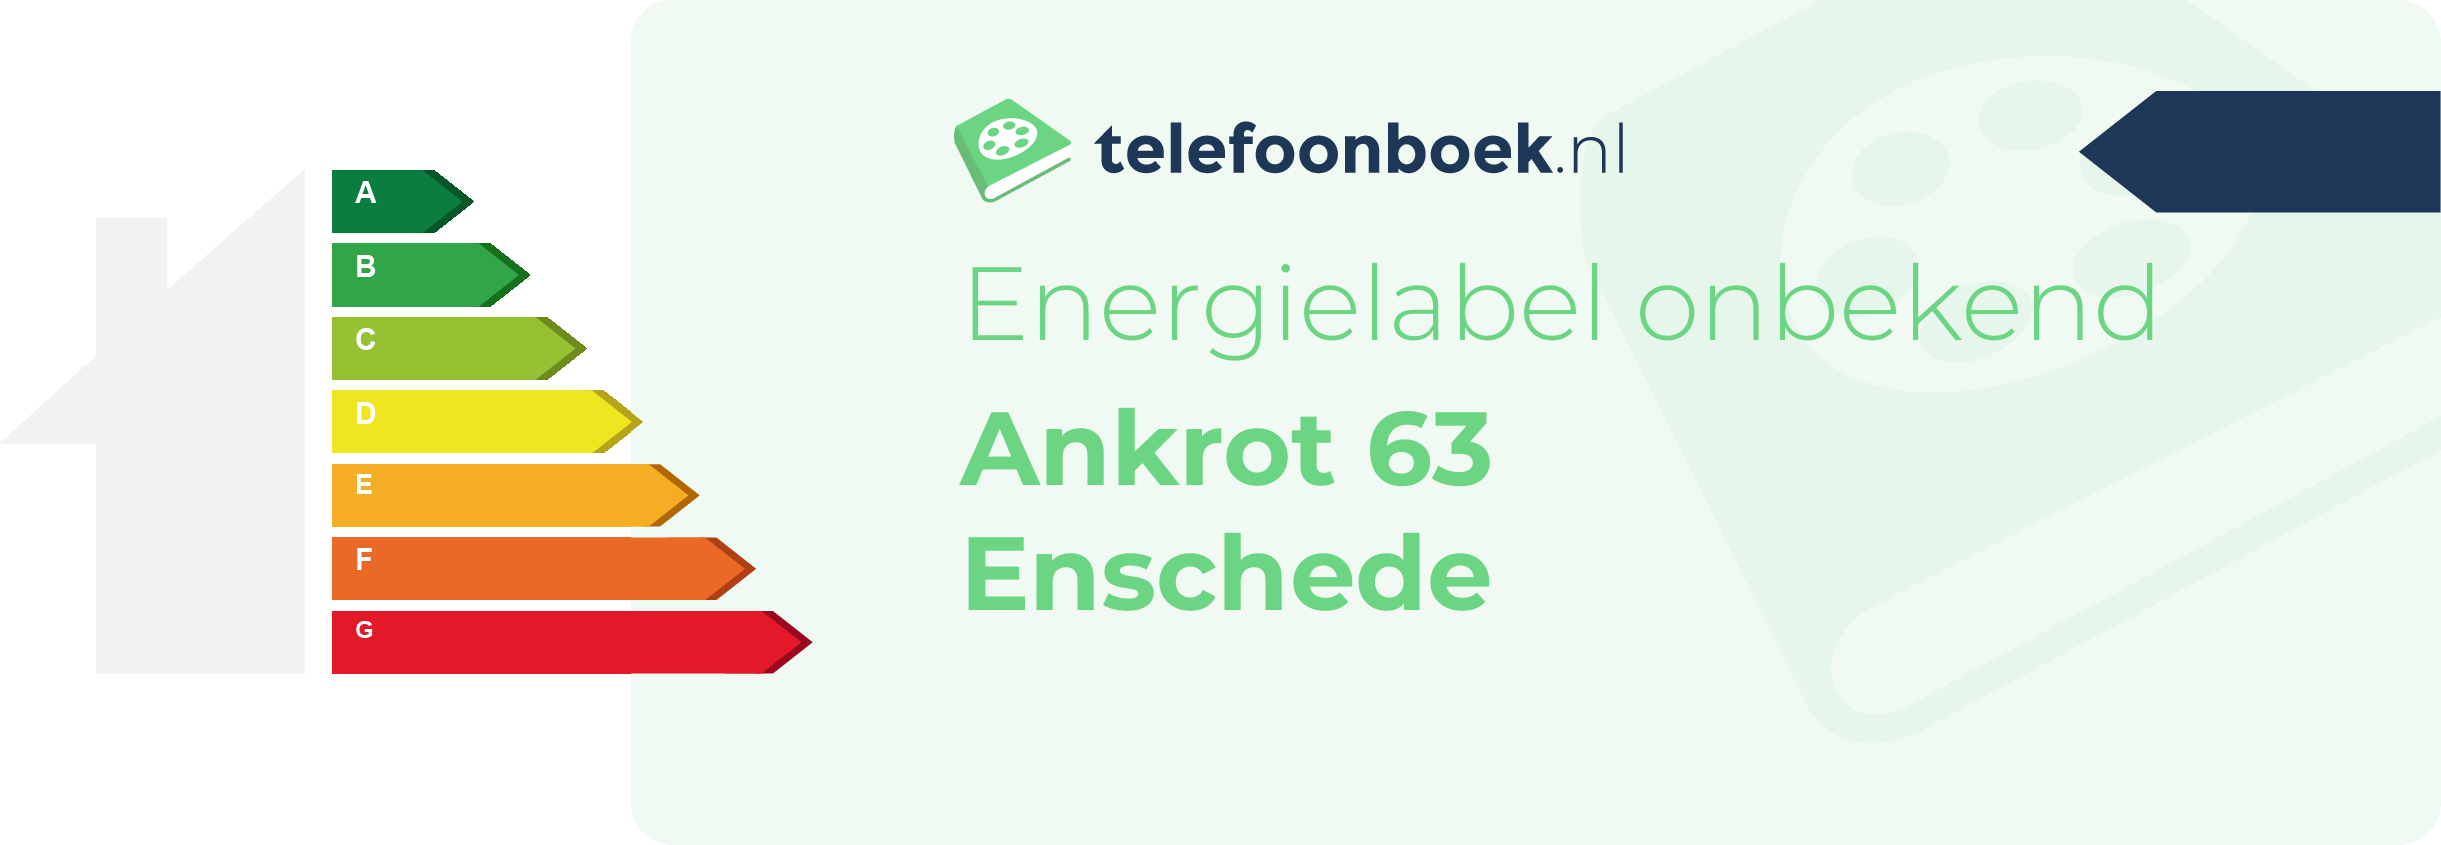 Energielabel Ankrot 63 Enschede